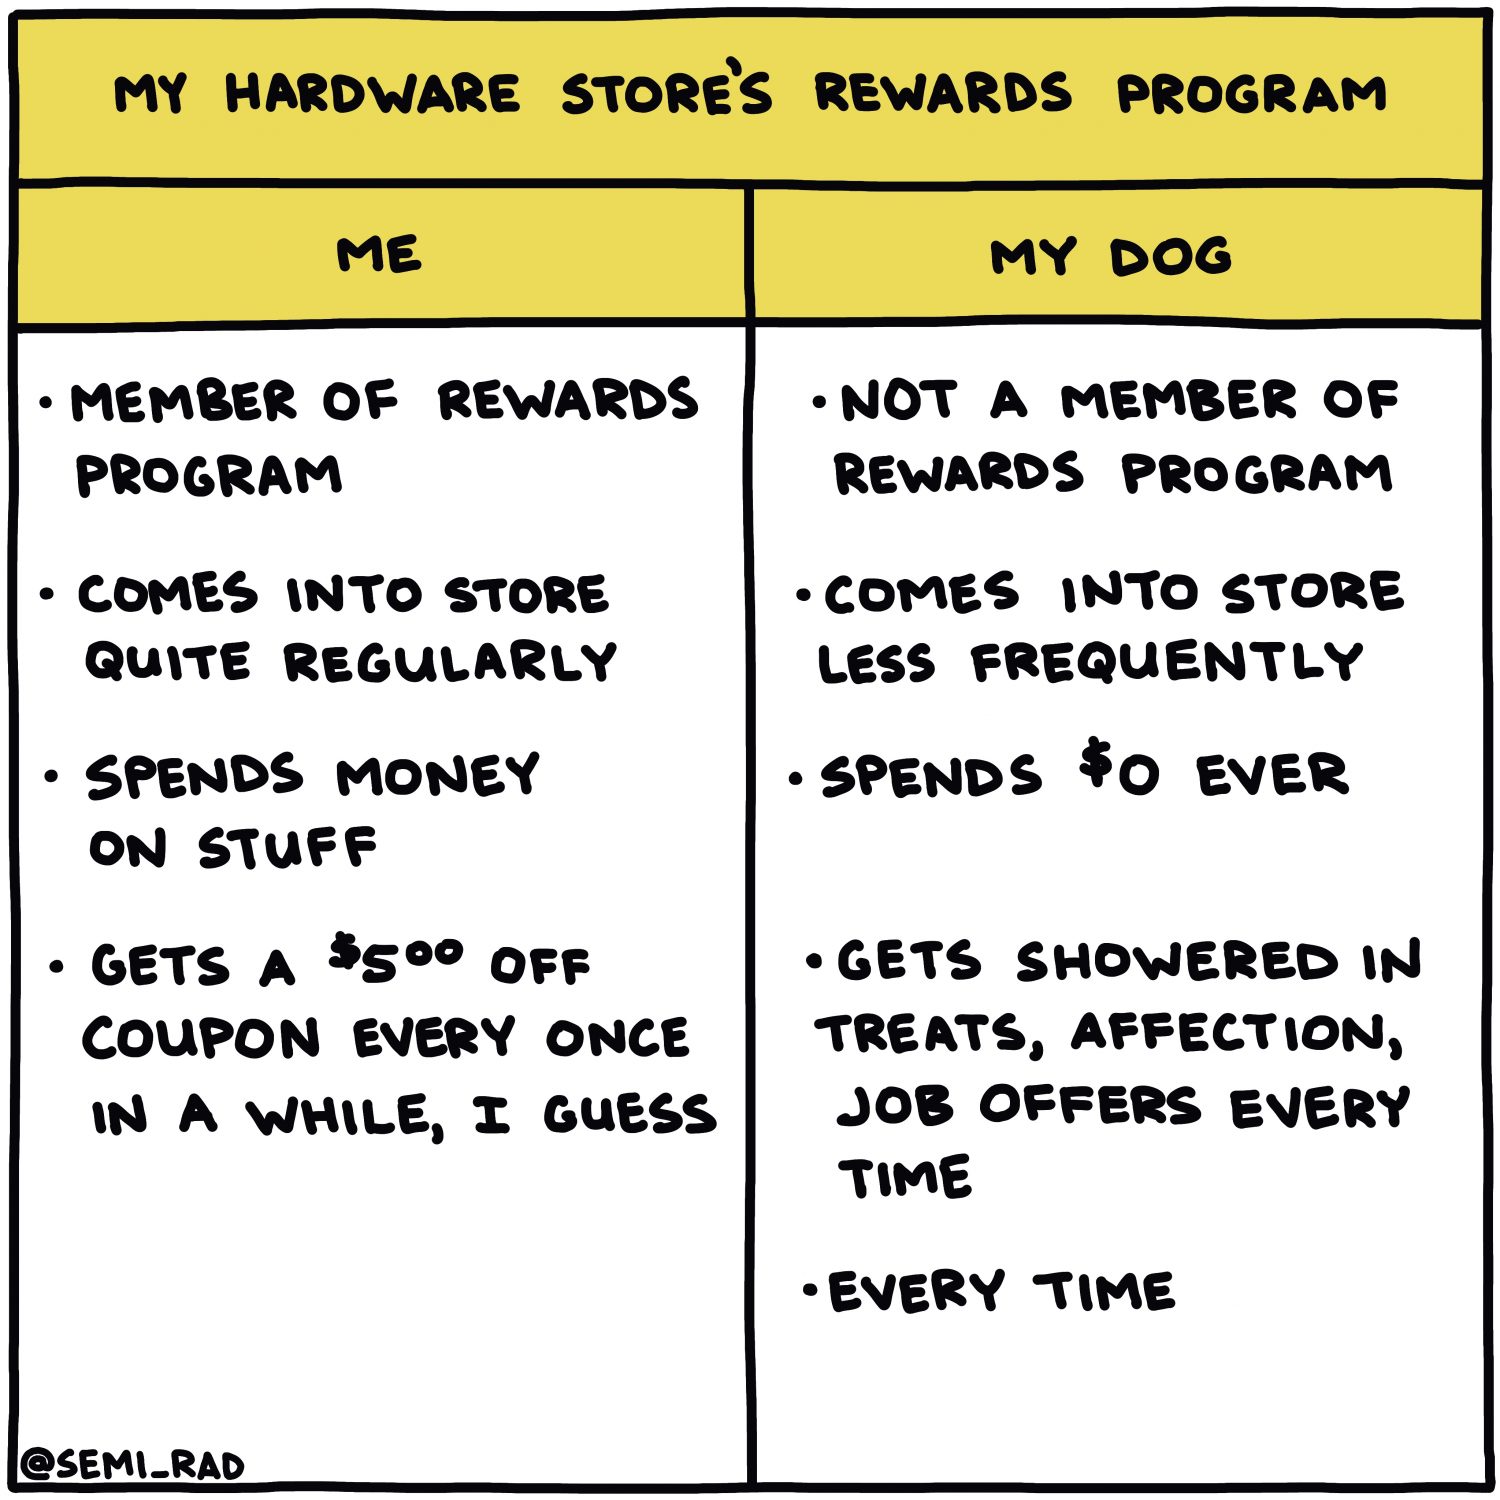 My Hardware Store’s Rewards Program